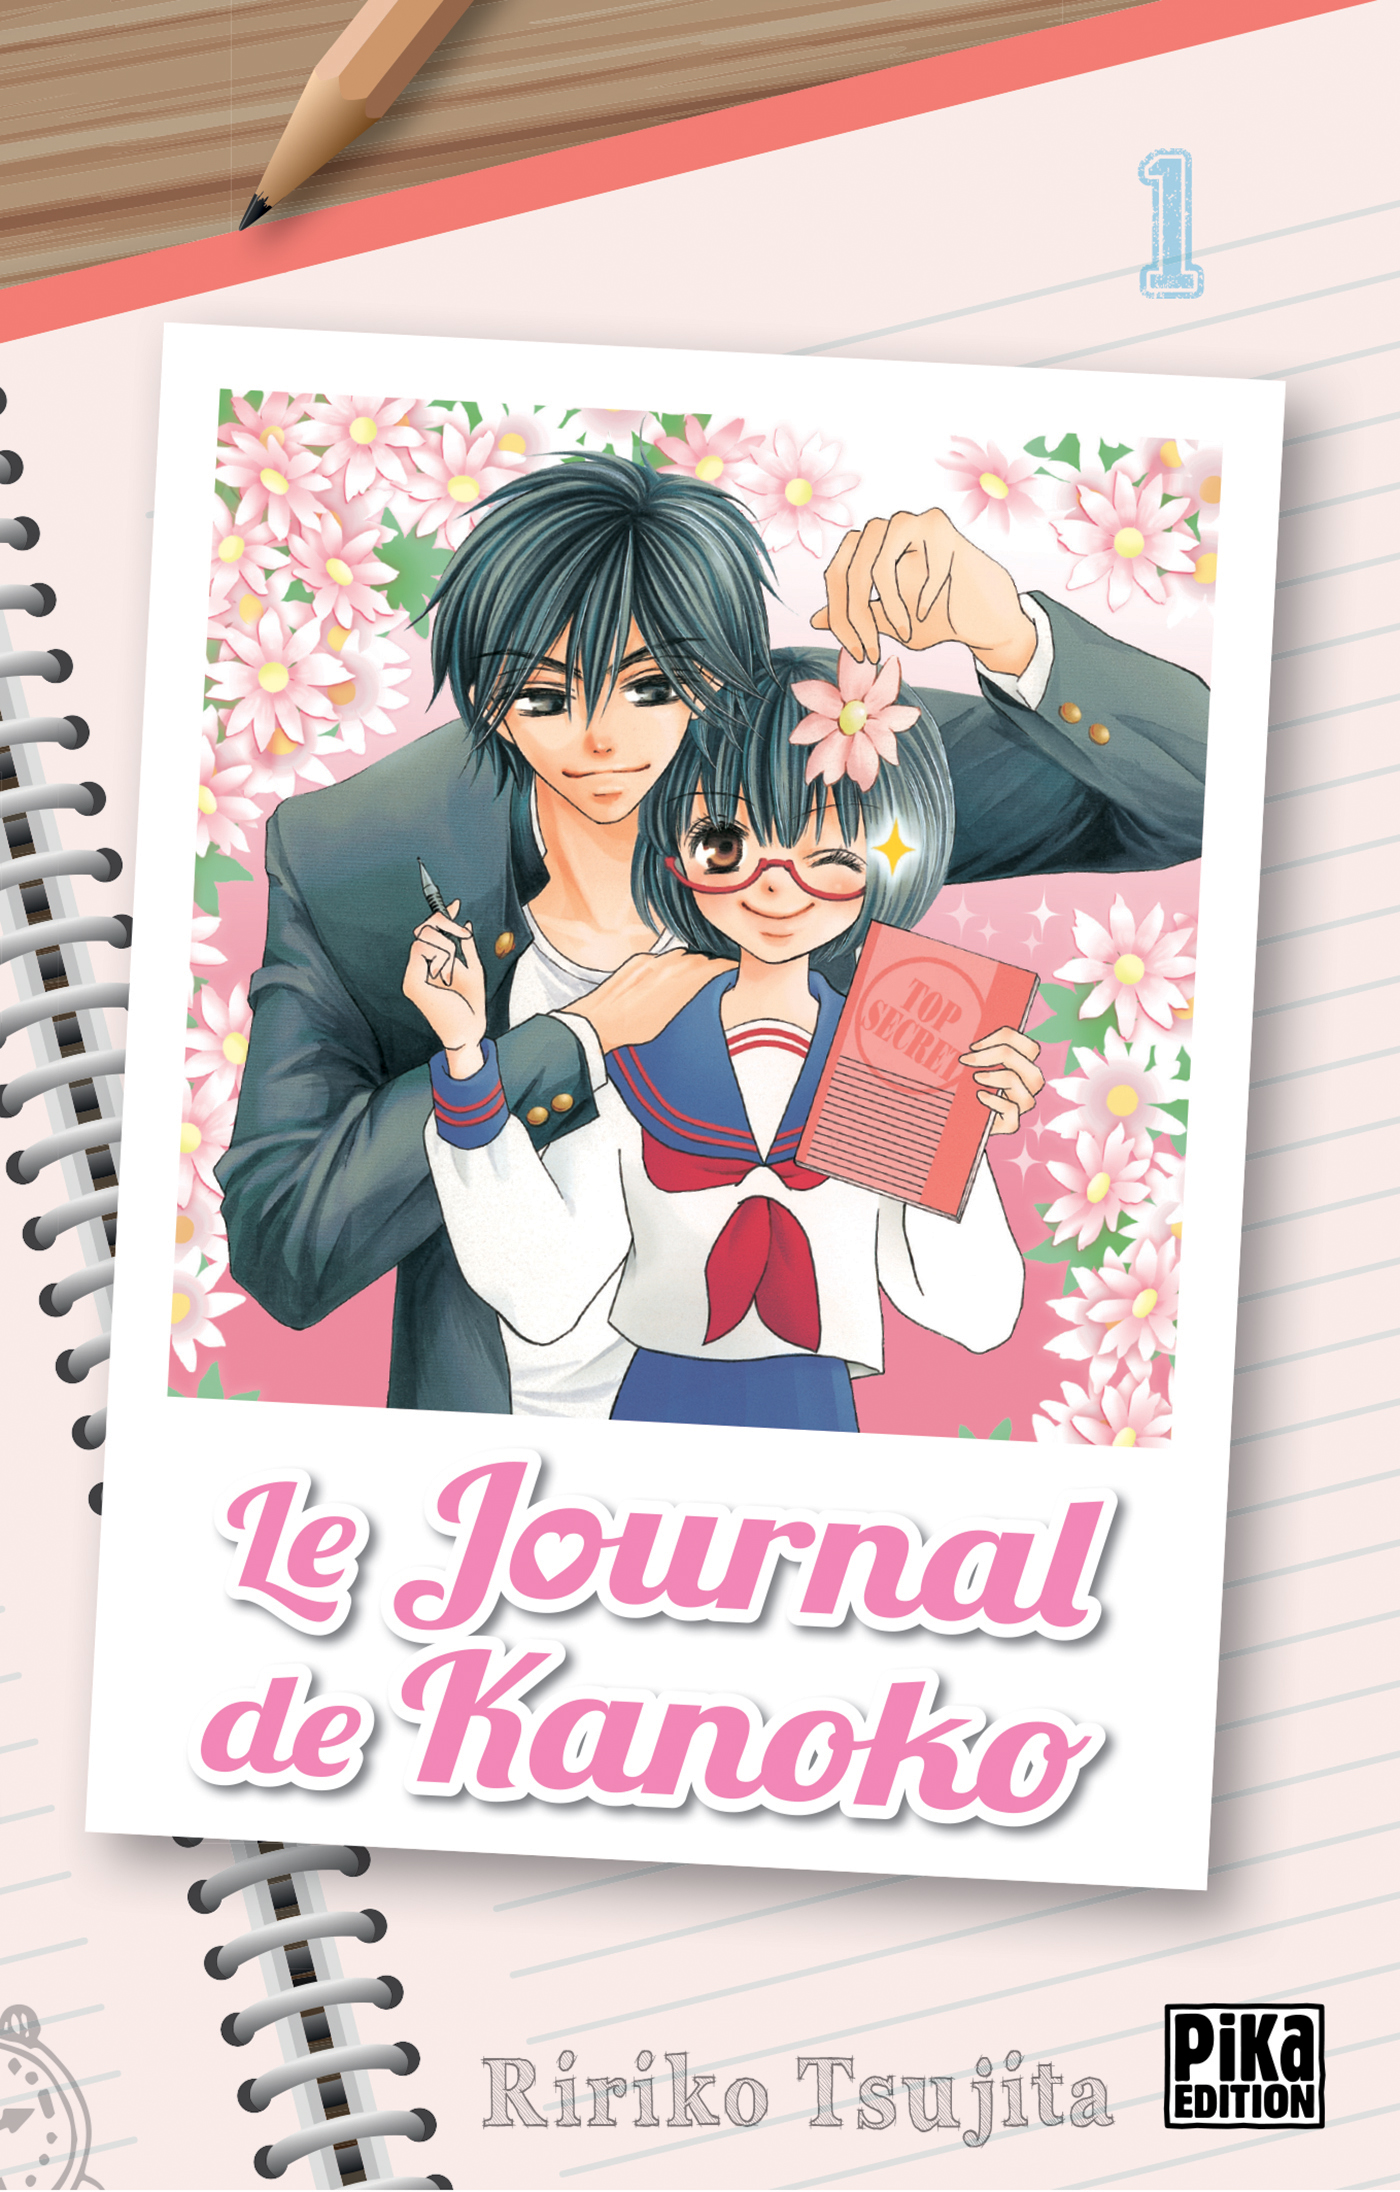 Le Journal de Kanoko 1